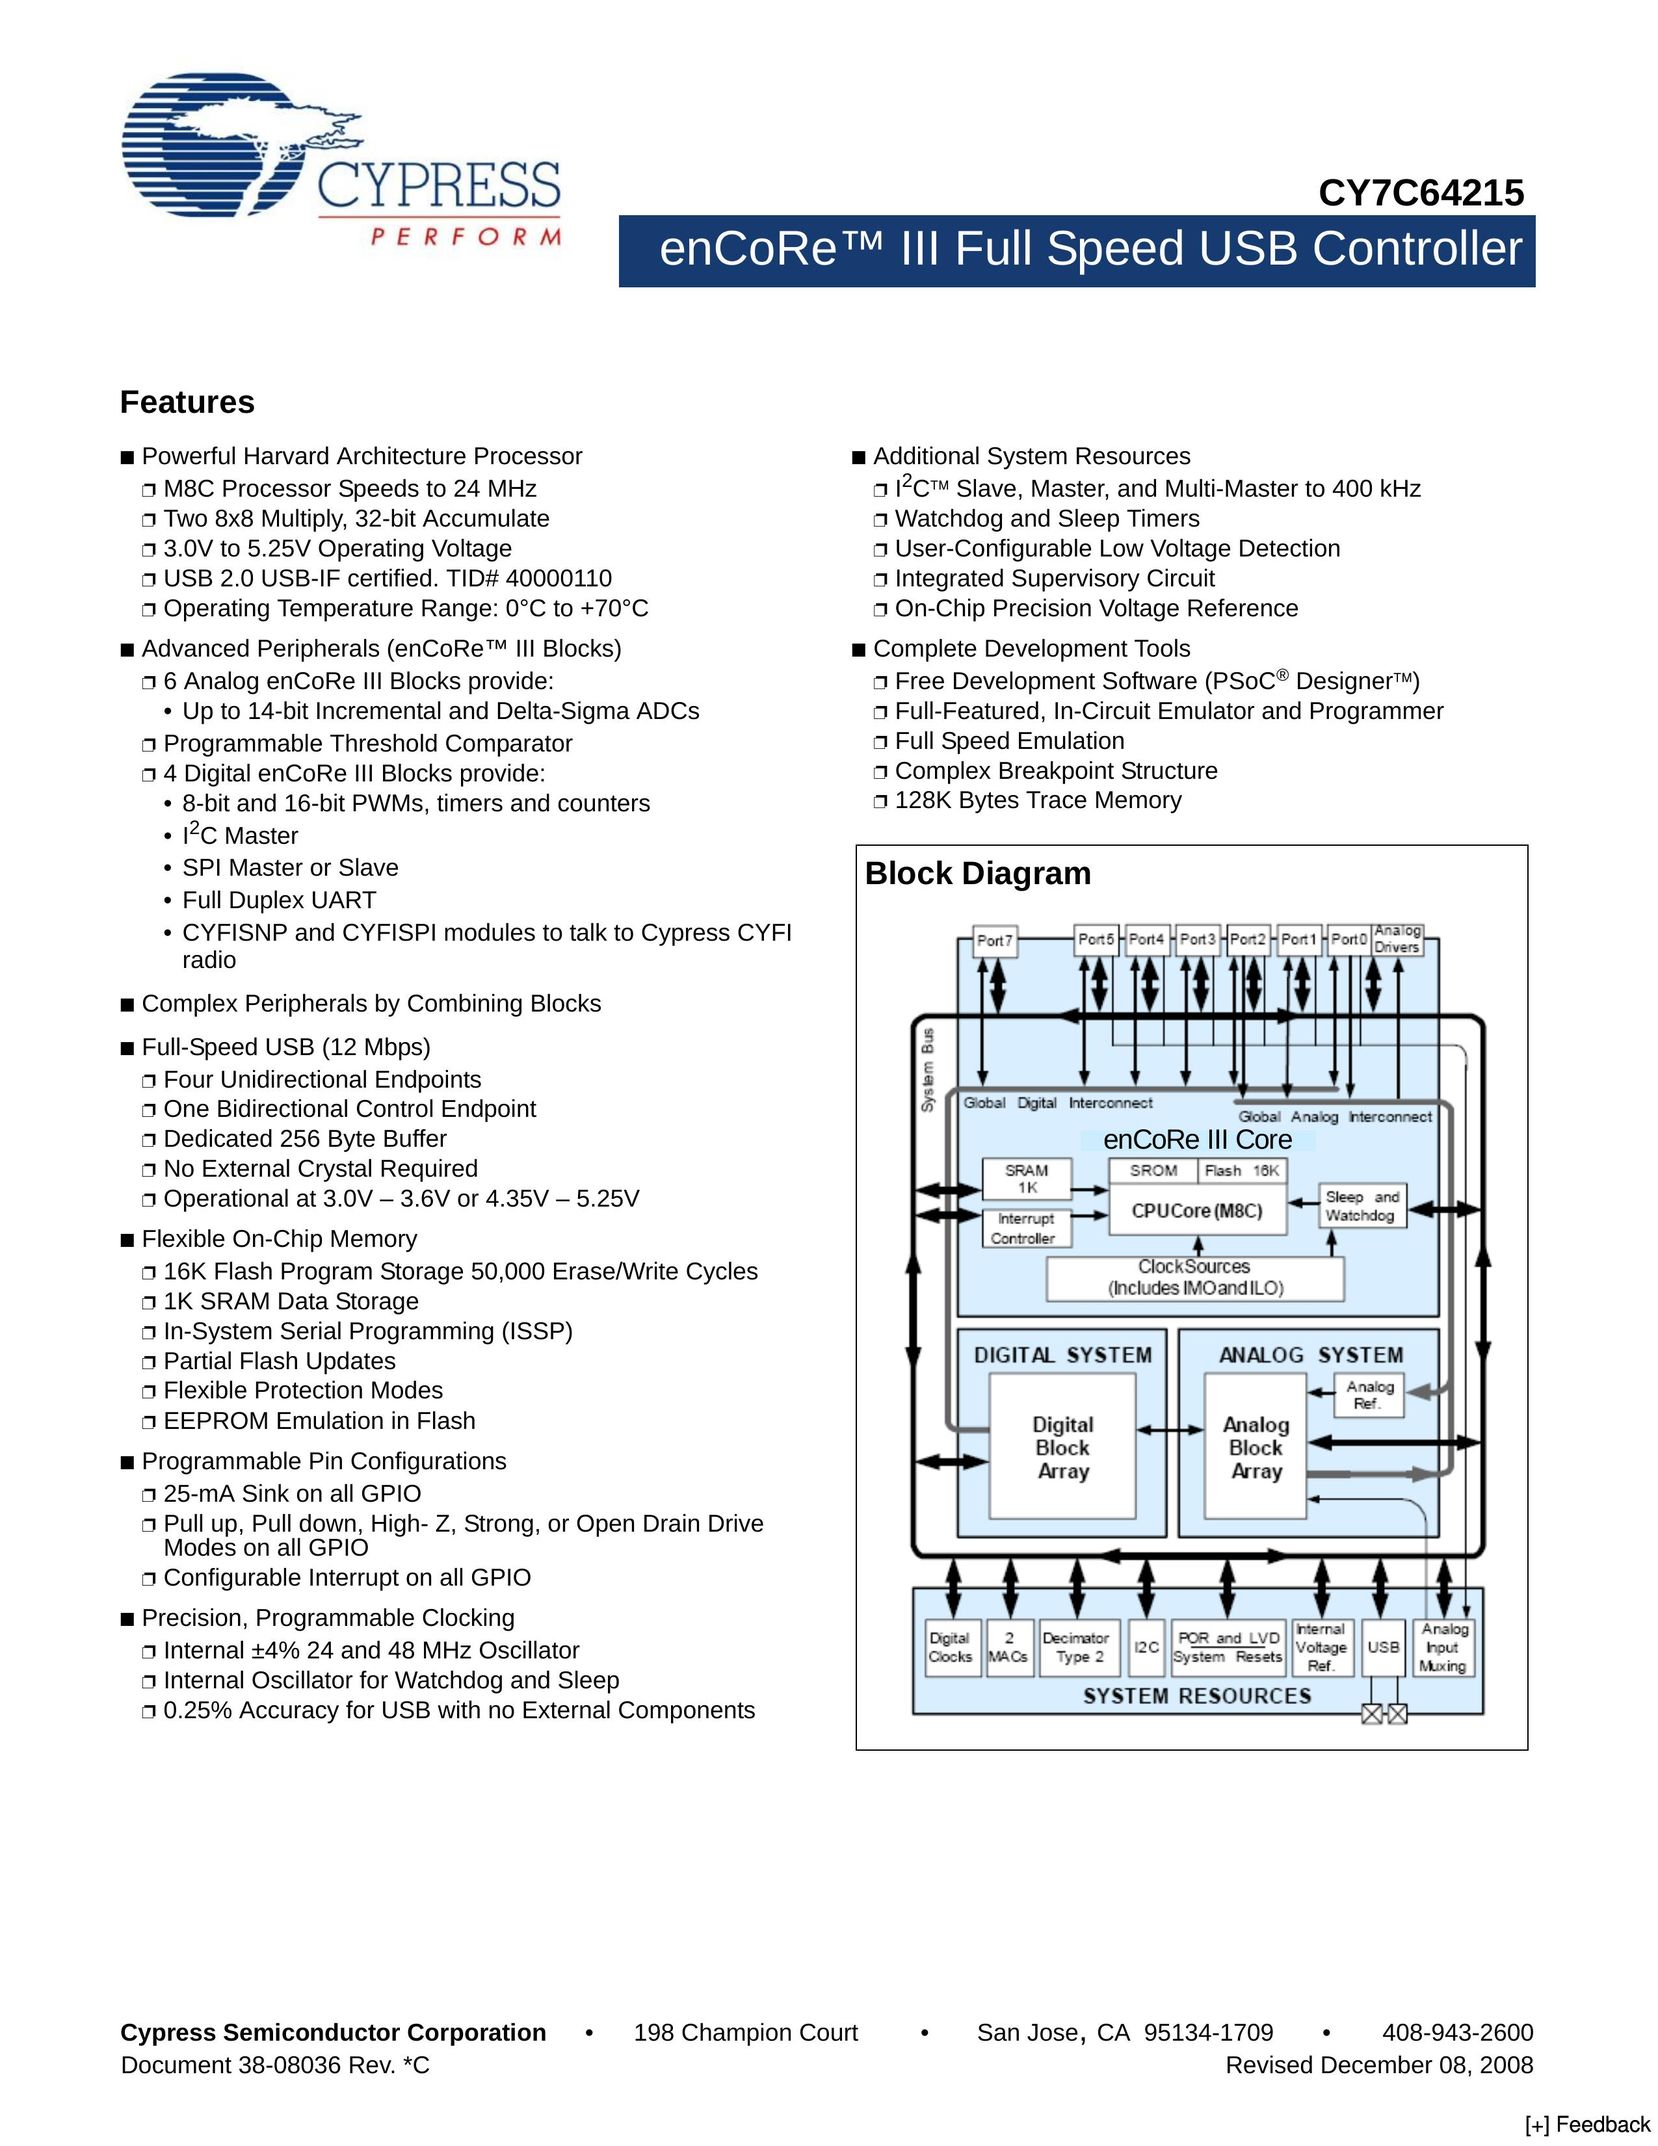 Cypress CY7C64215 Network Card User Manual